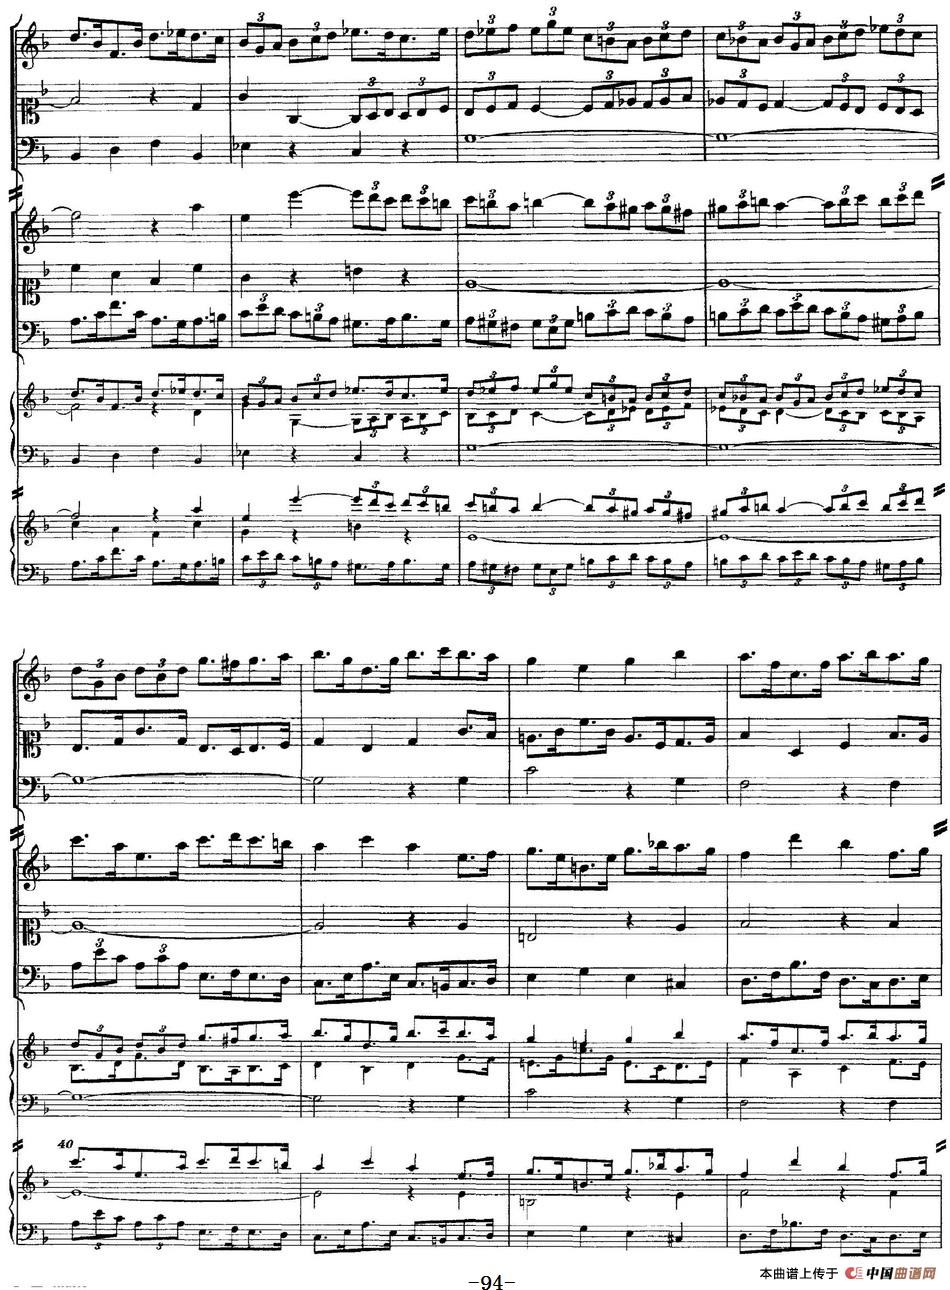 The Art of the Fugue BWV 1080（赋格的艺术-XVI）